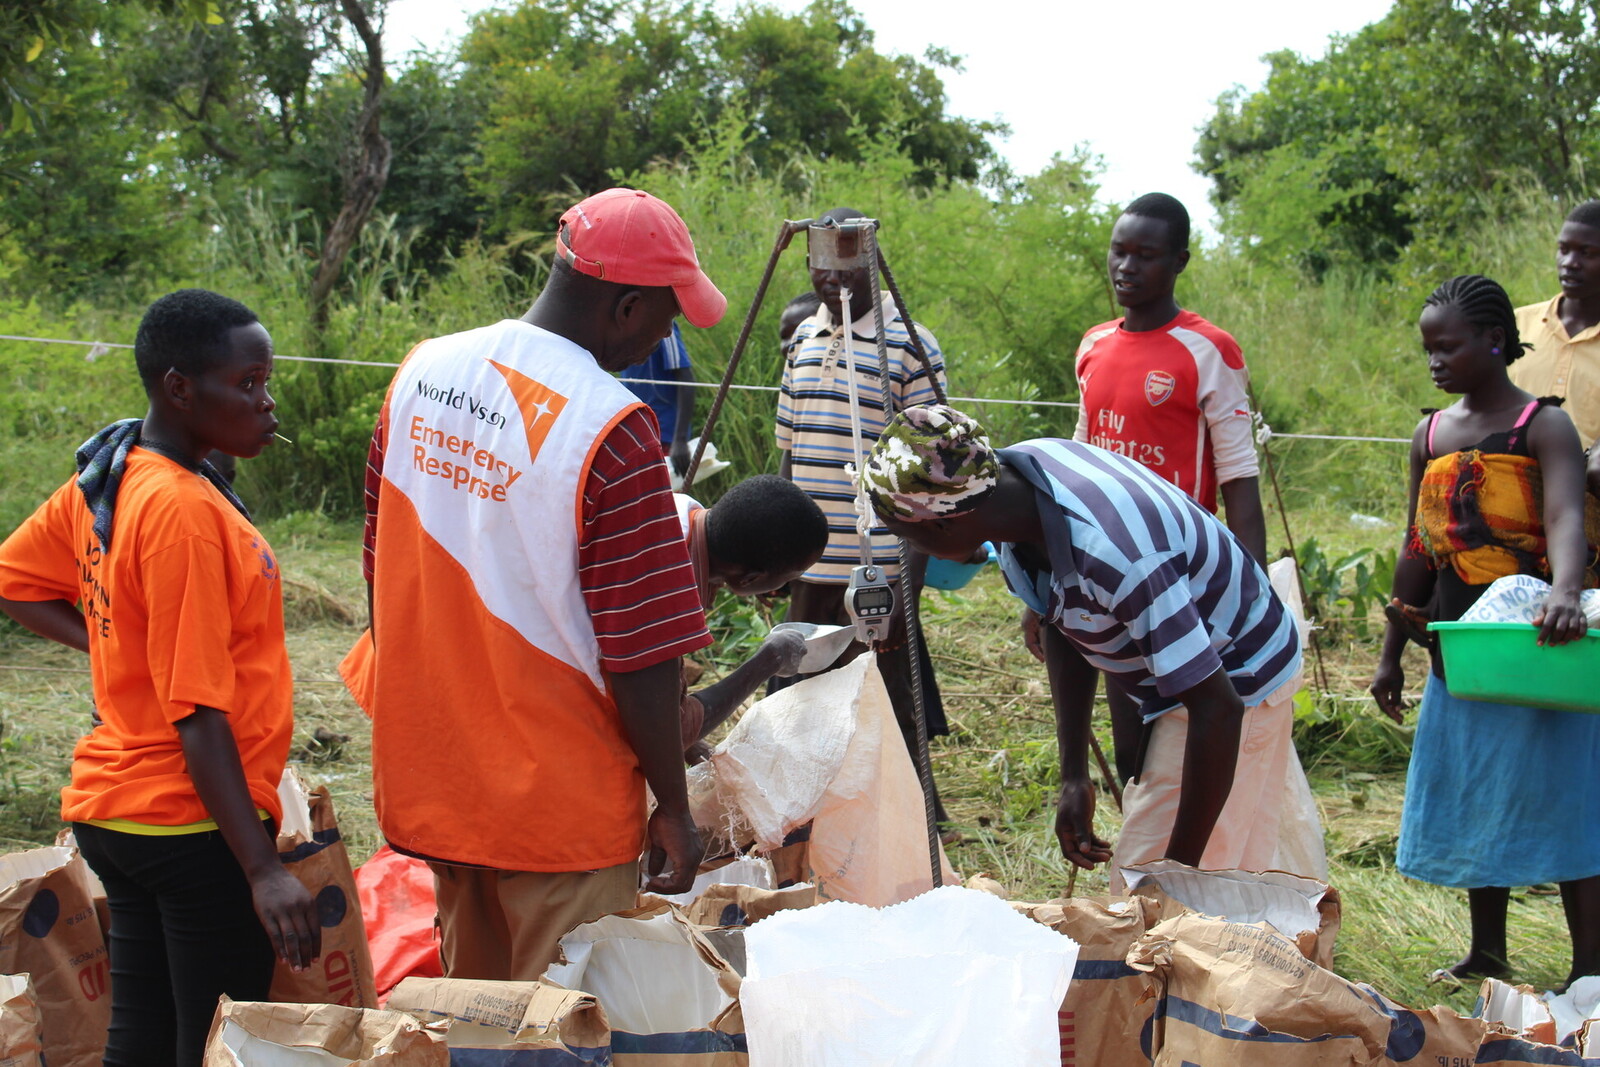 Unsere Bündnisorganisation World Vision versorgt ankommende Flüchtlinge in Uganda mit Lebensmitteln.